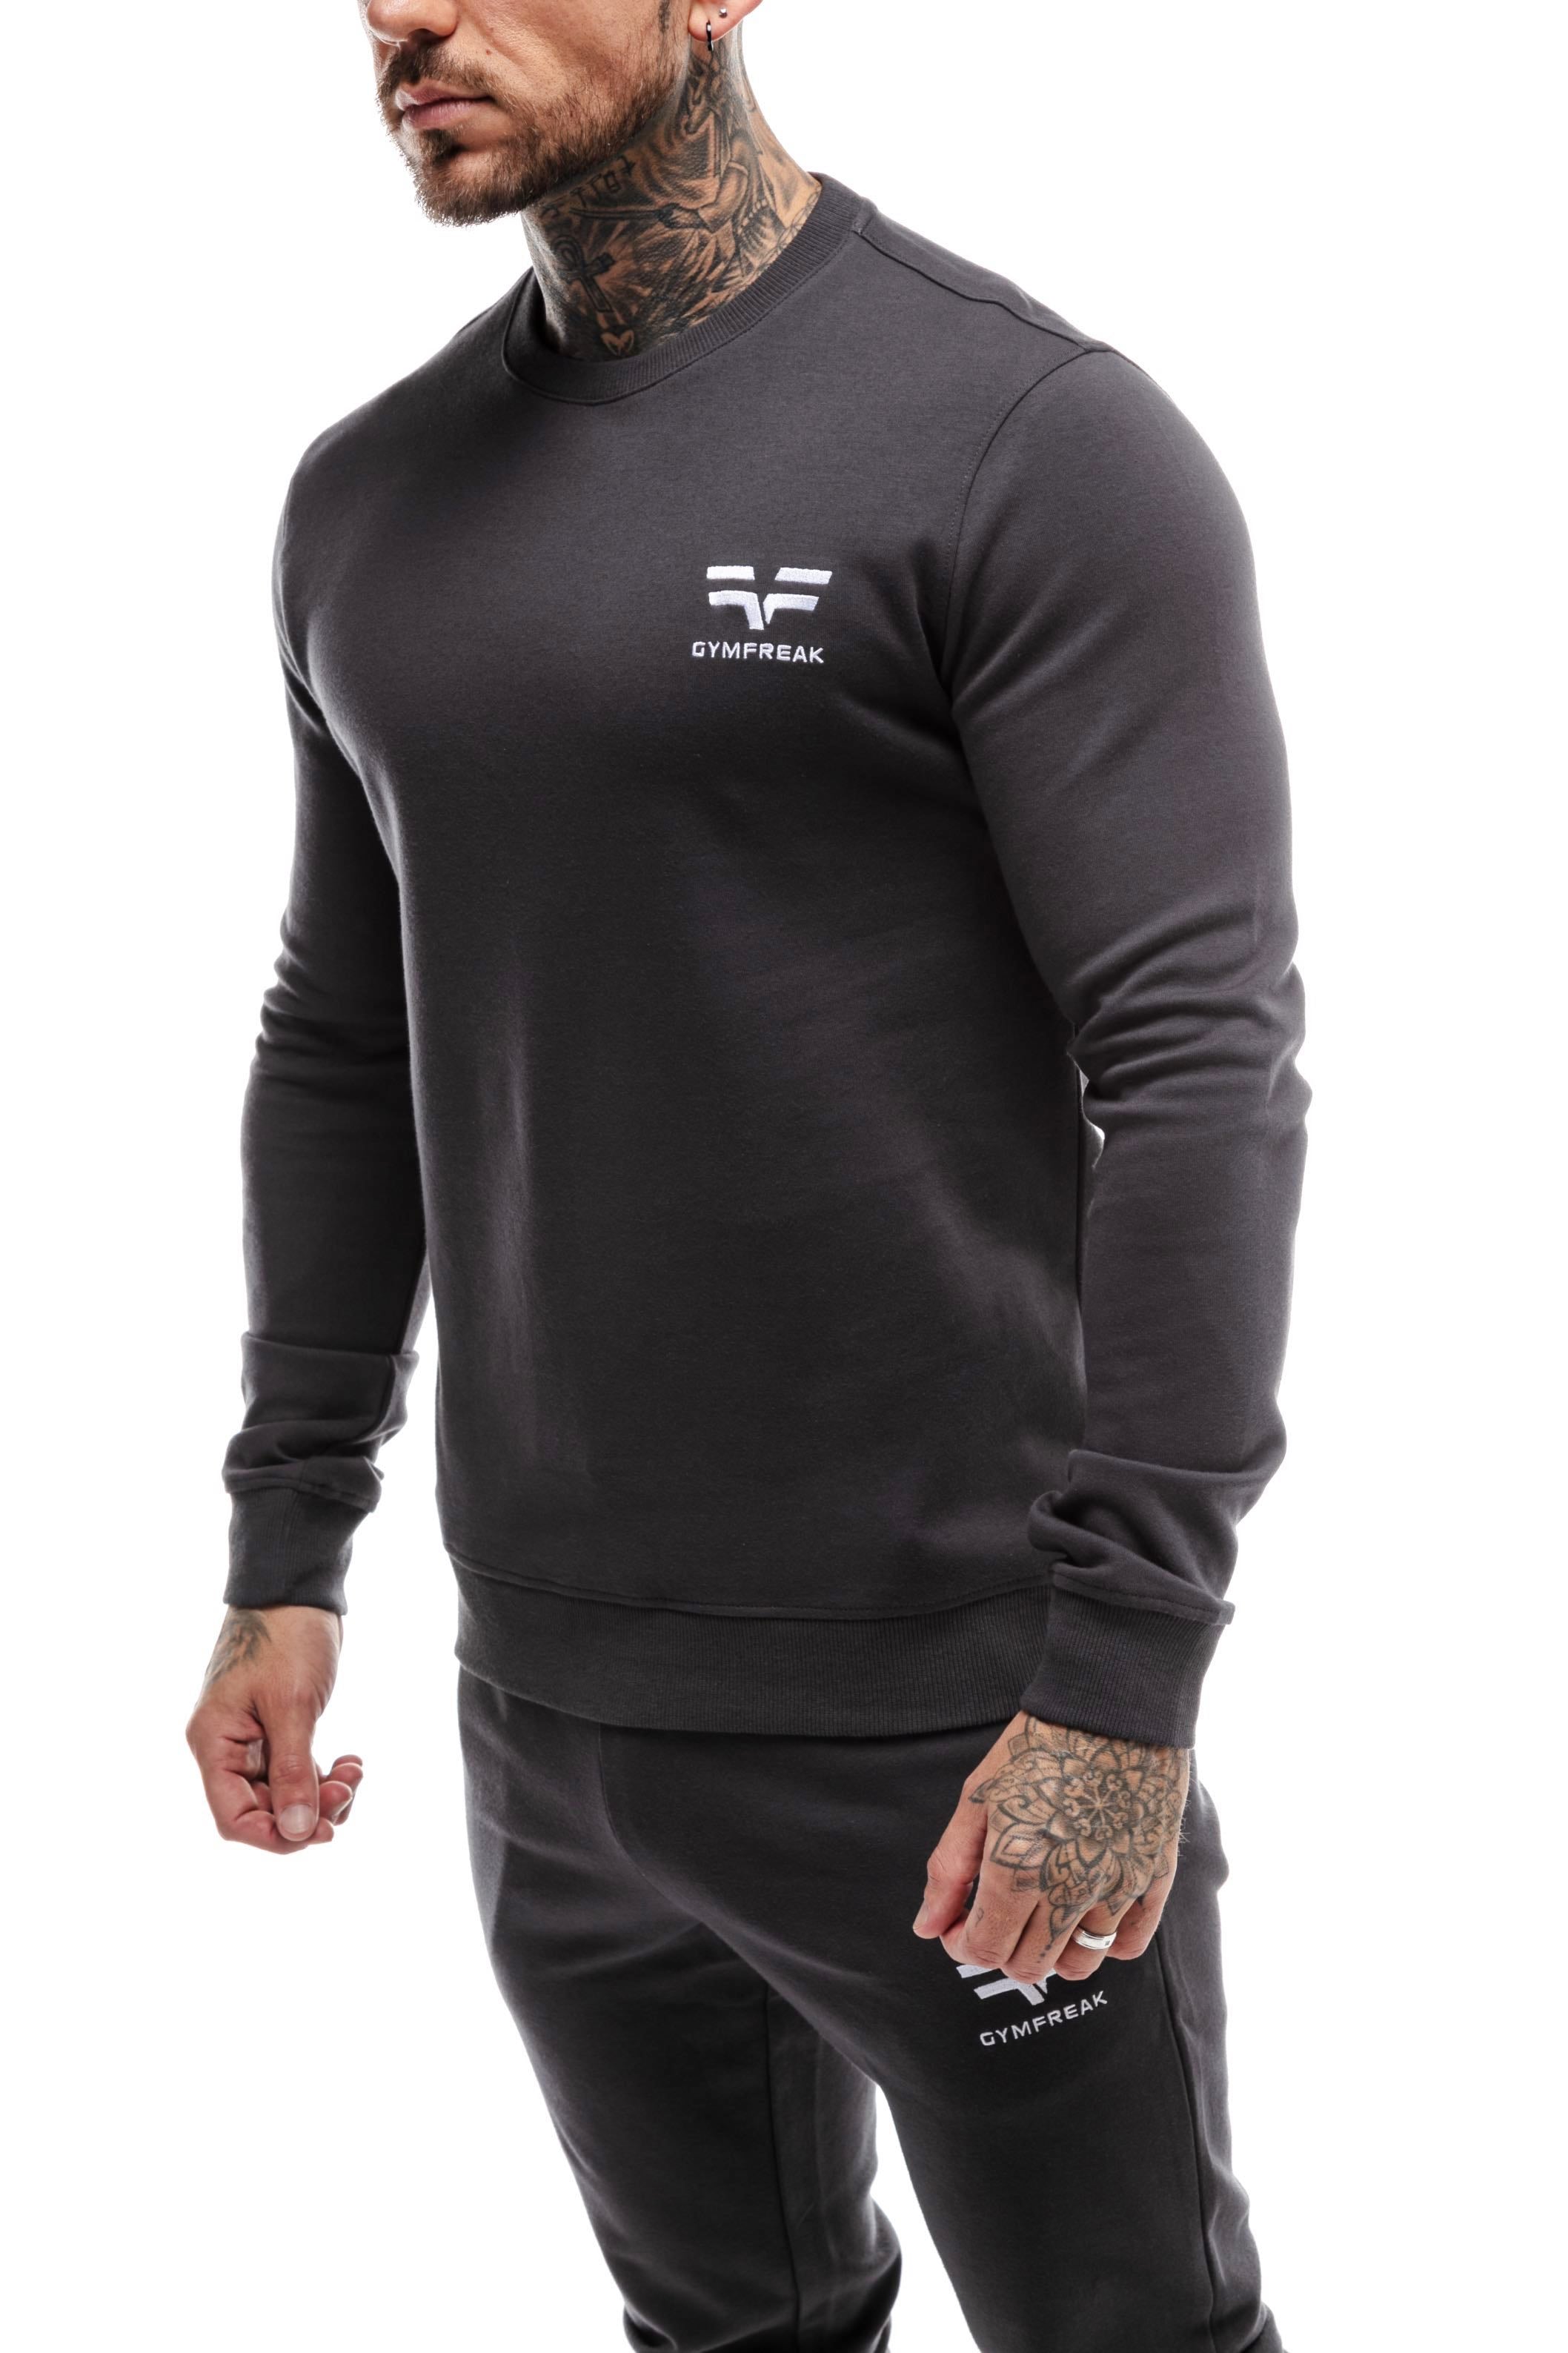 GymFreak Mens Power Sweatshirt - Charcoal